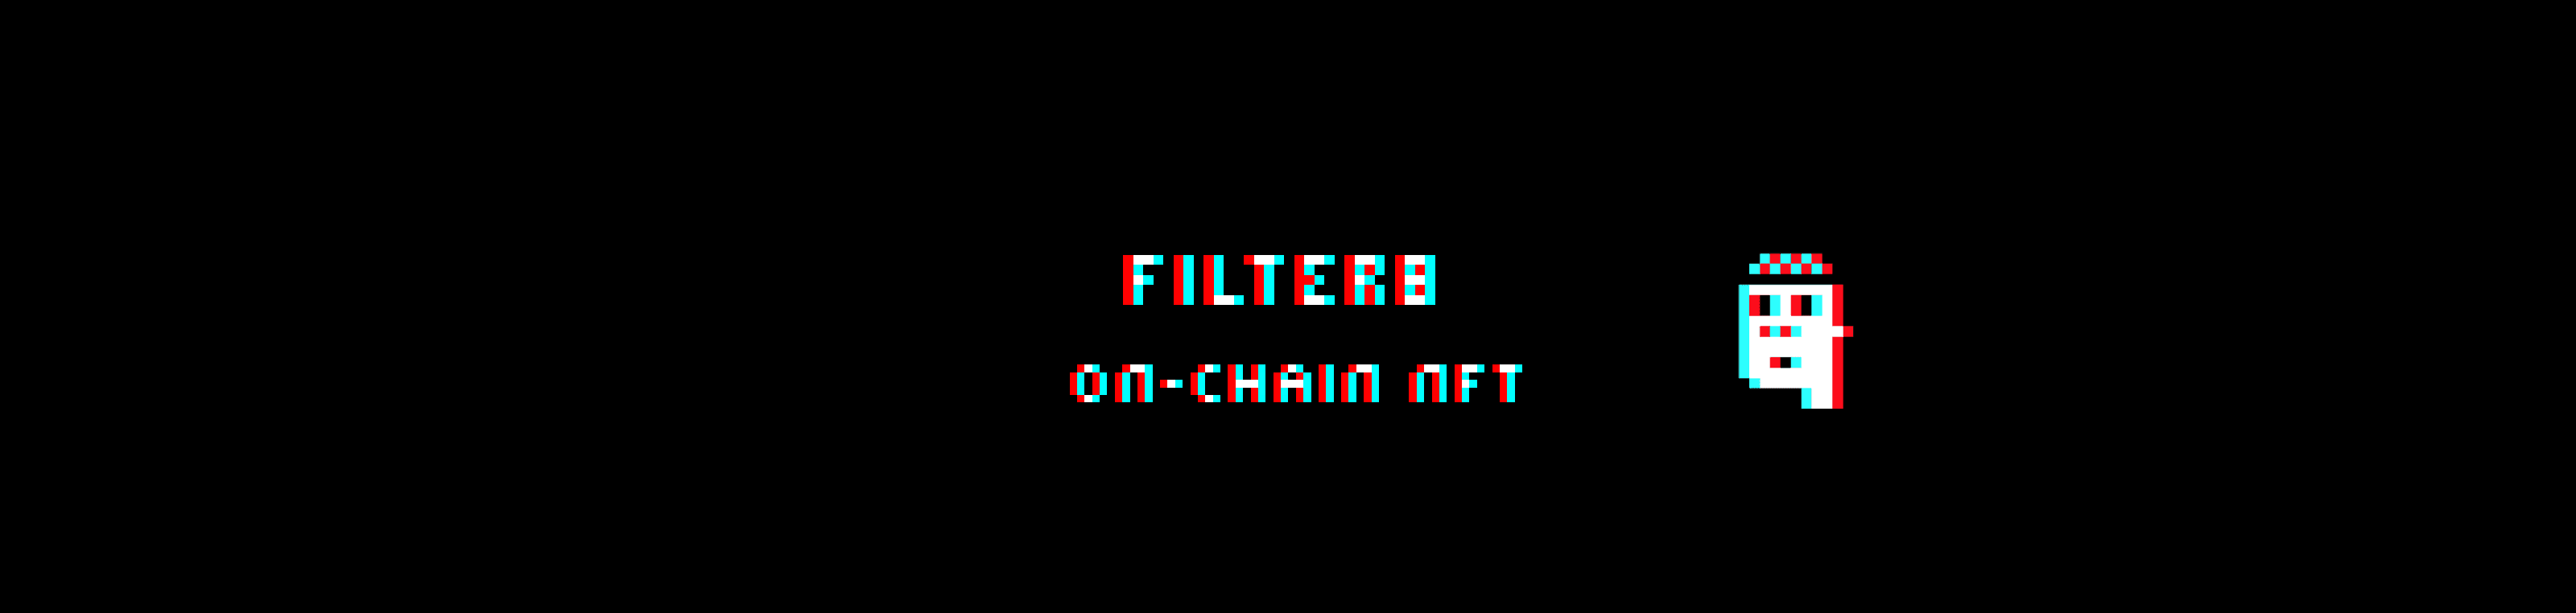 FILTER8 banner